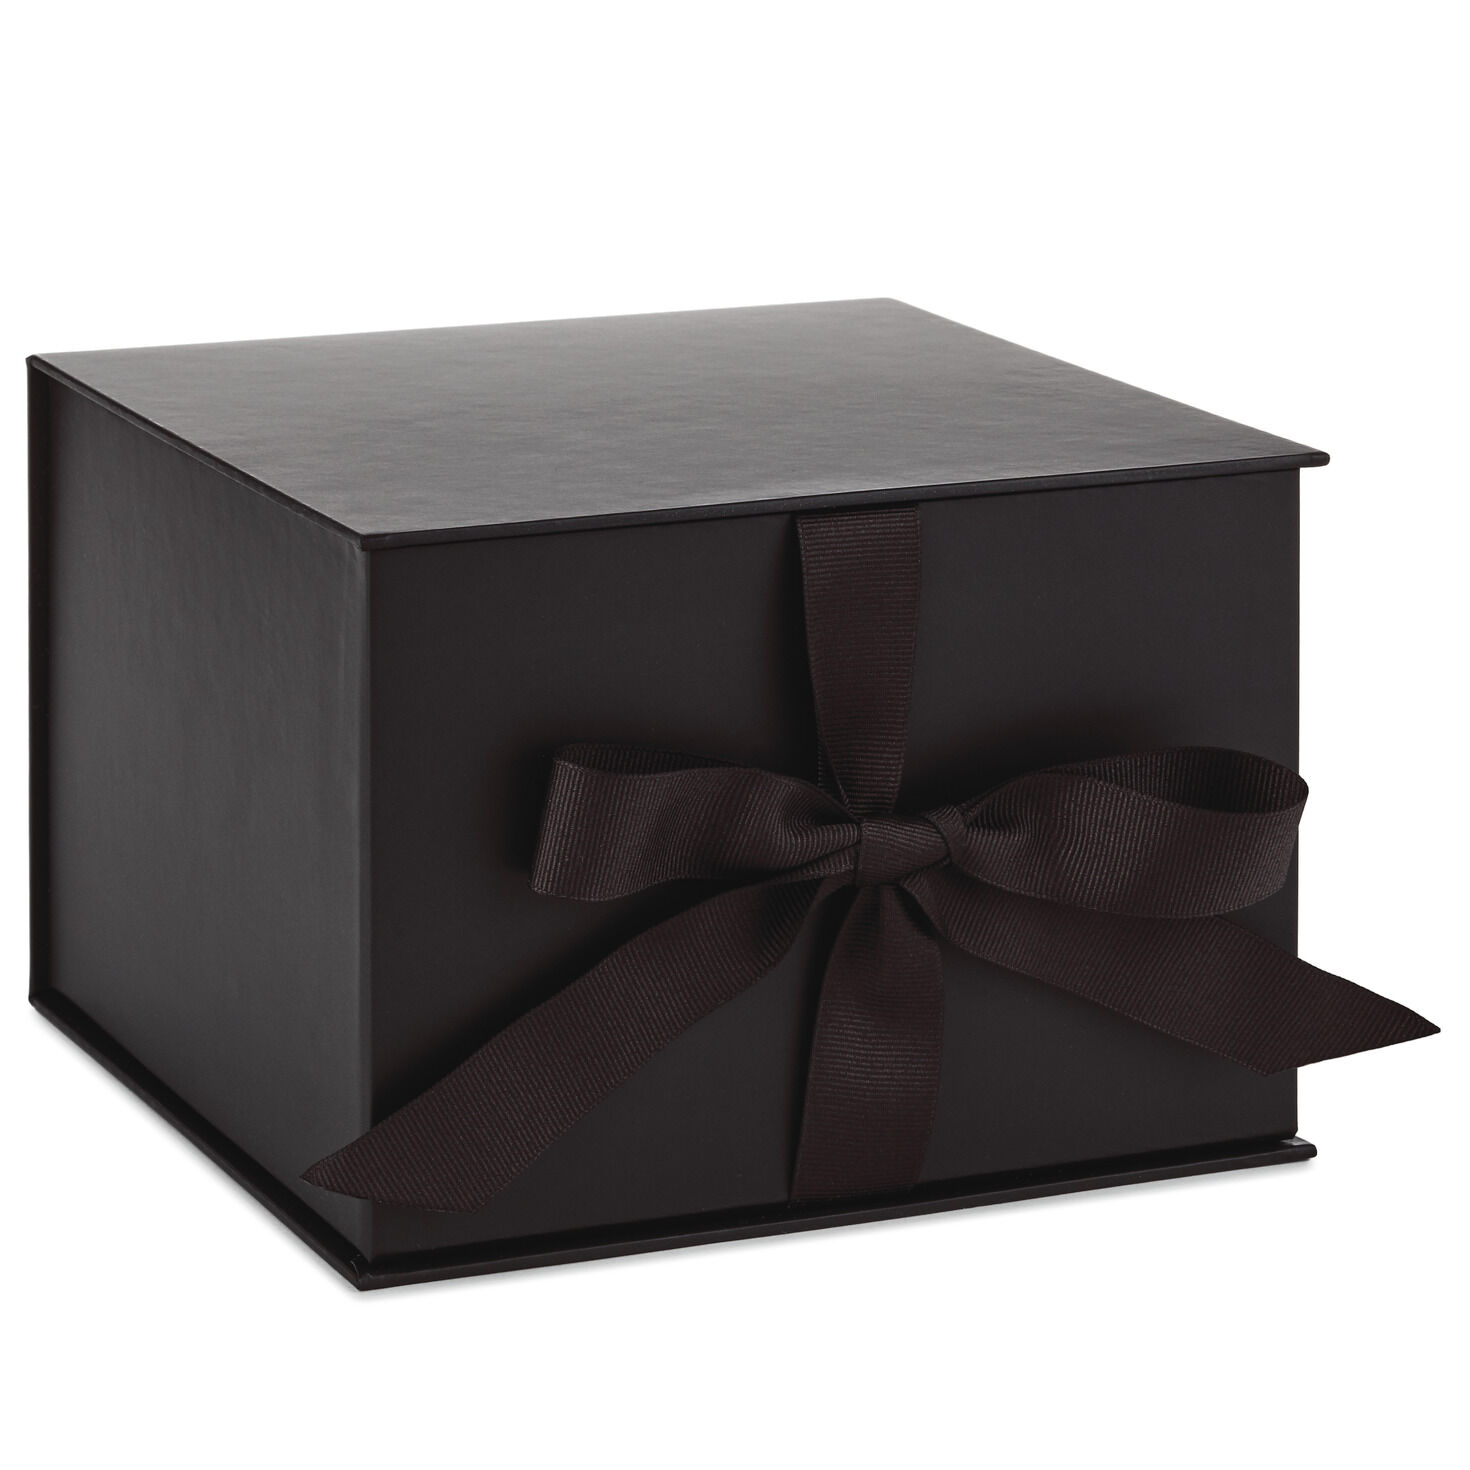 Black 5x7 Large Gift Box With Shredded Paper Filler - Gift Boxes - Hallmark